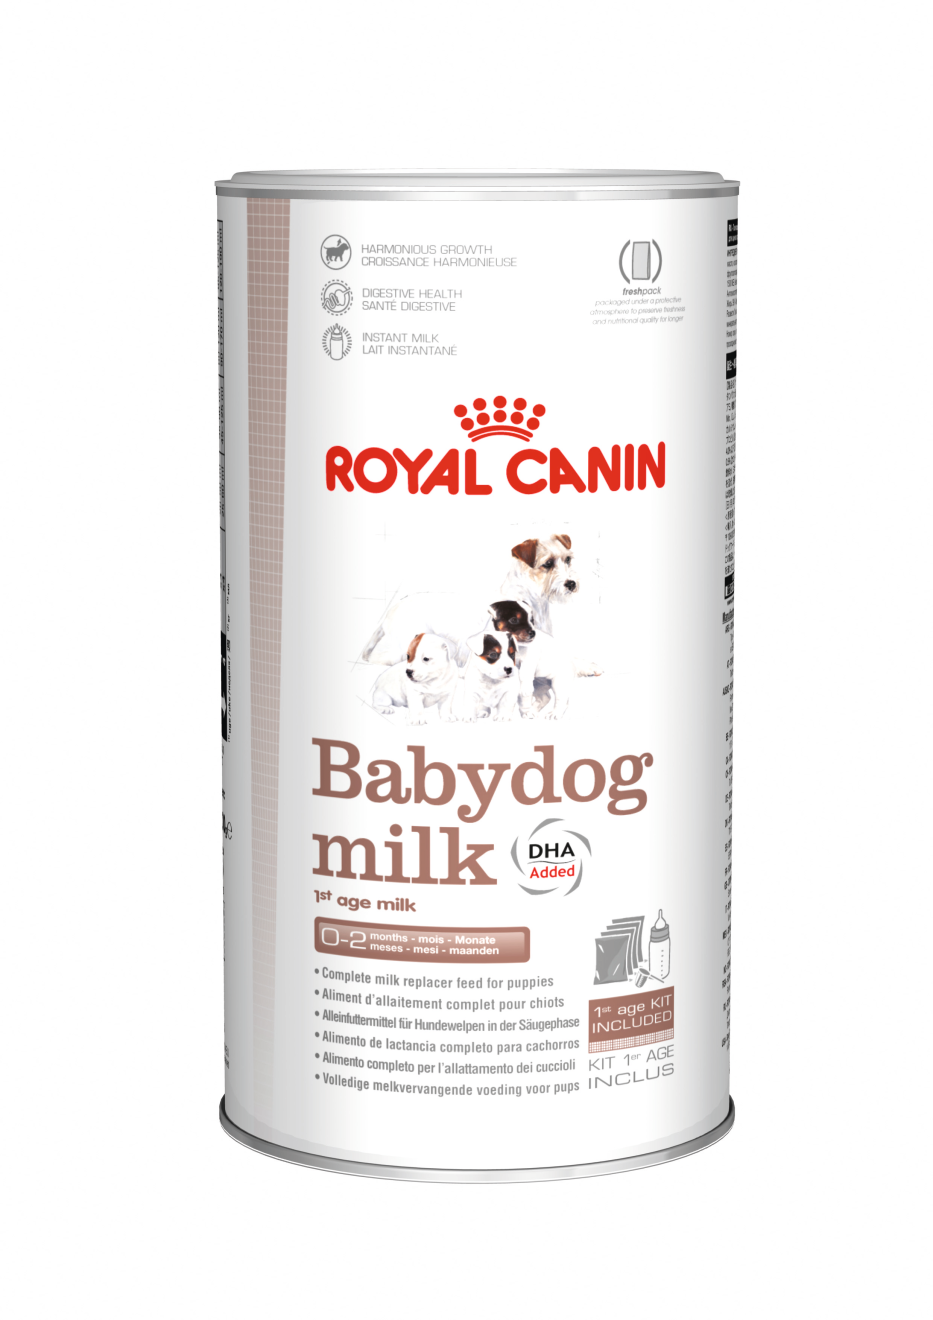 Packshot Royal Canin Babydog Milk voor pasgeboren puppy's